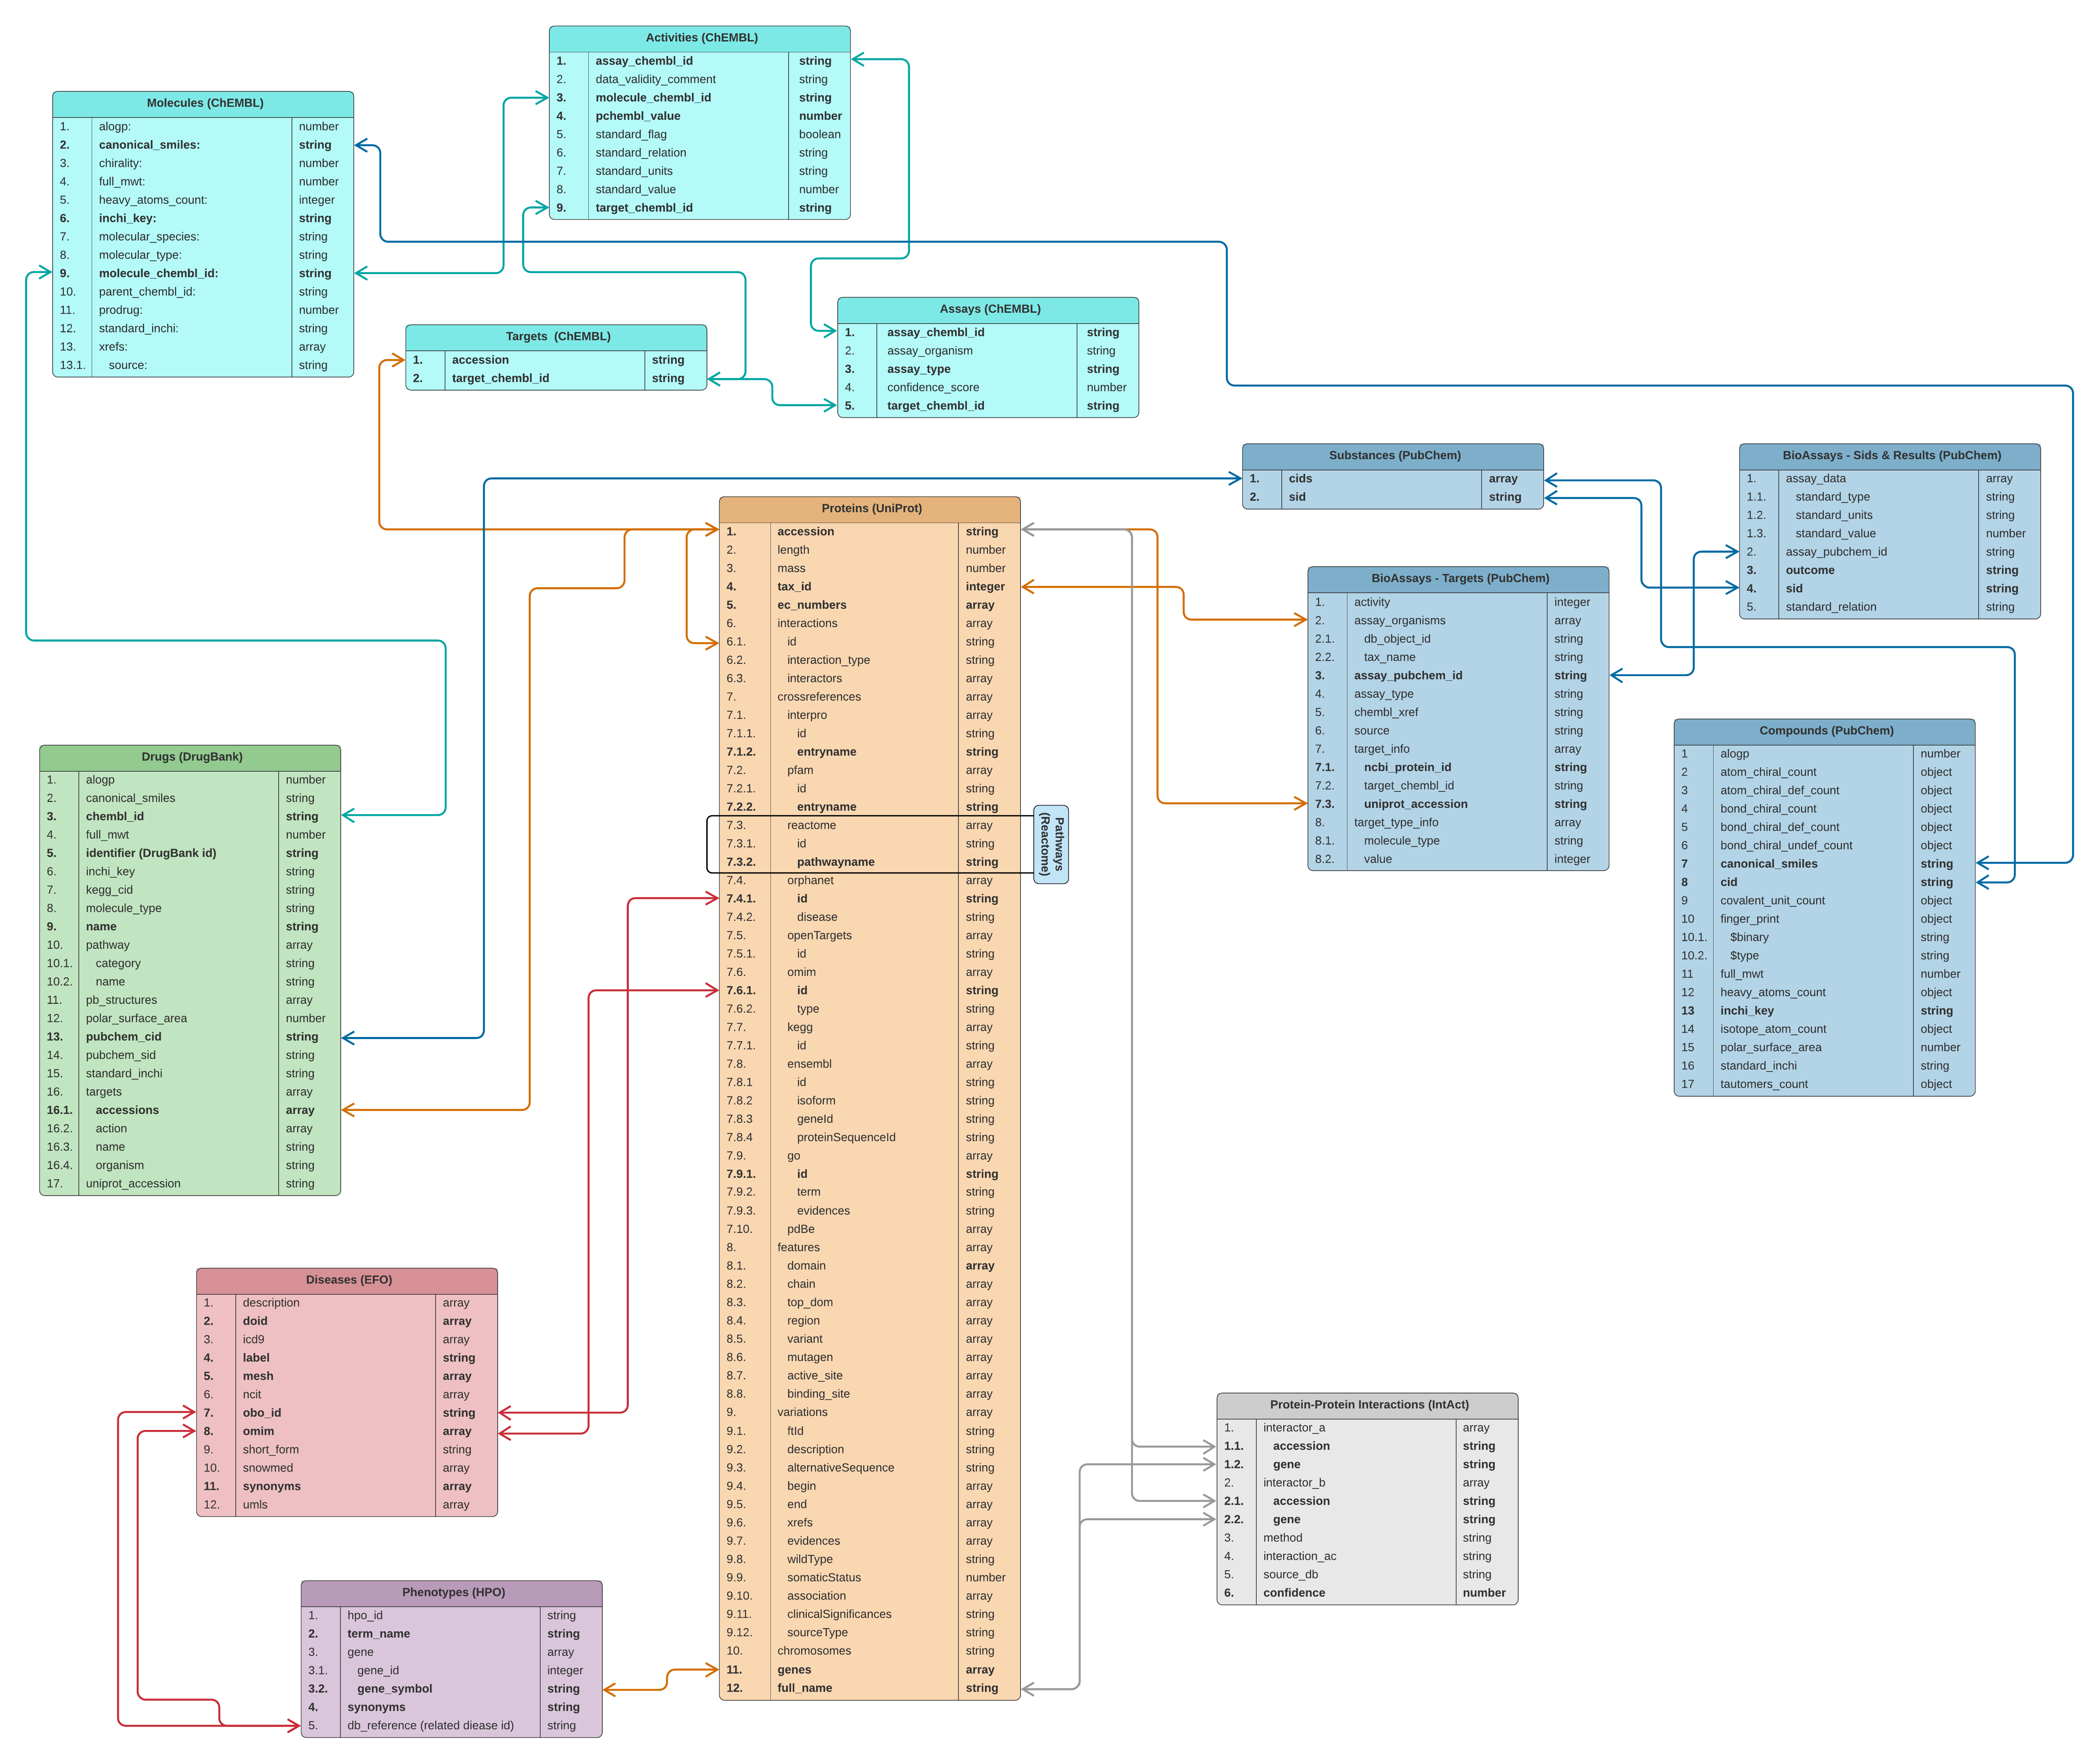 Schematic representation of the CROssBAR noSQL database